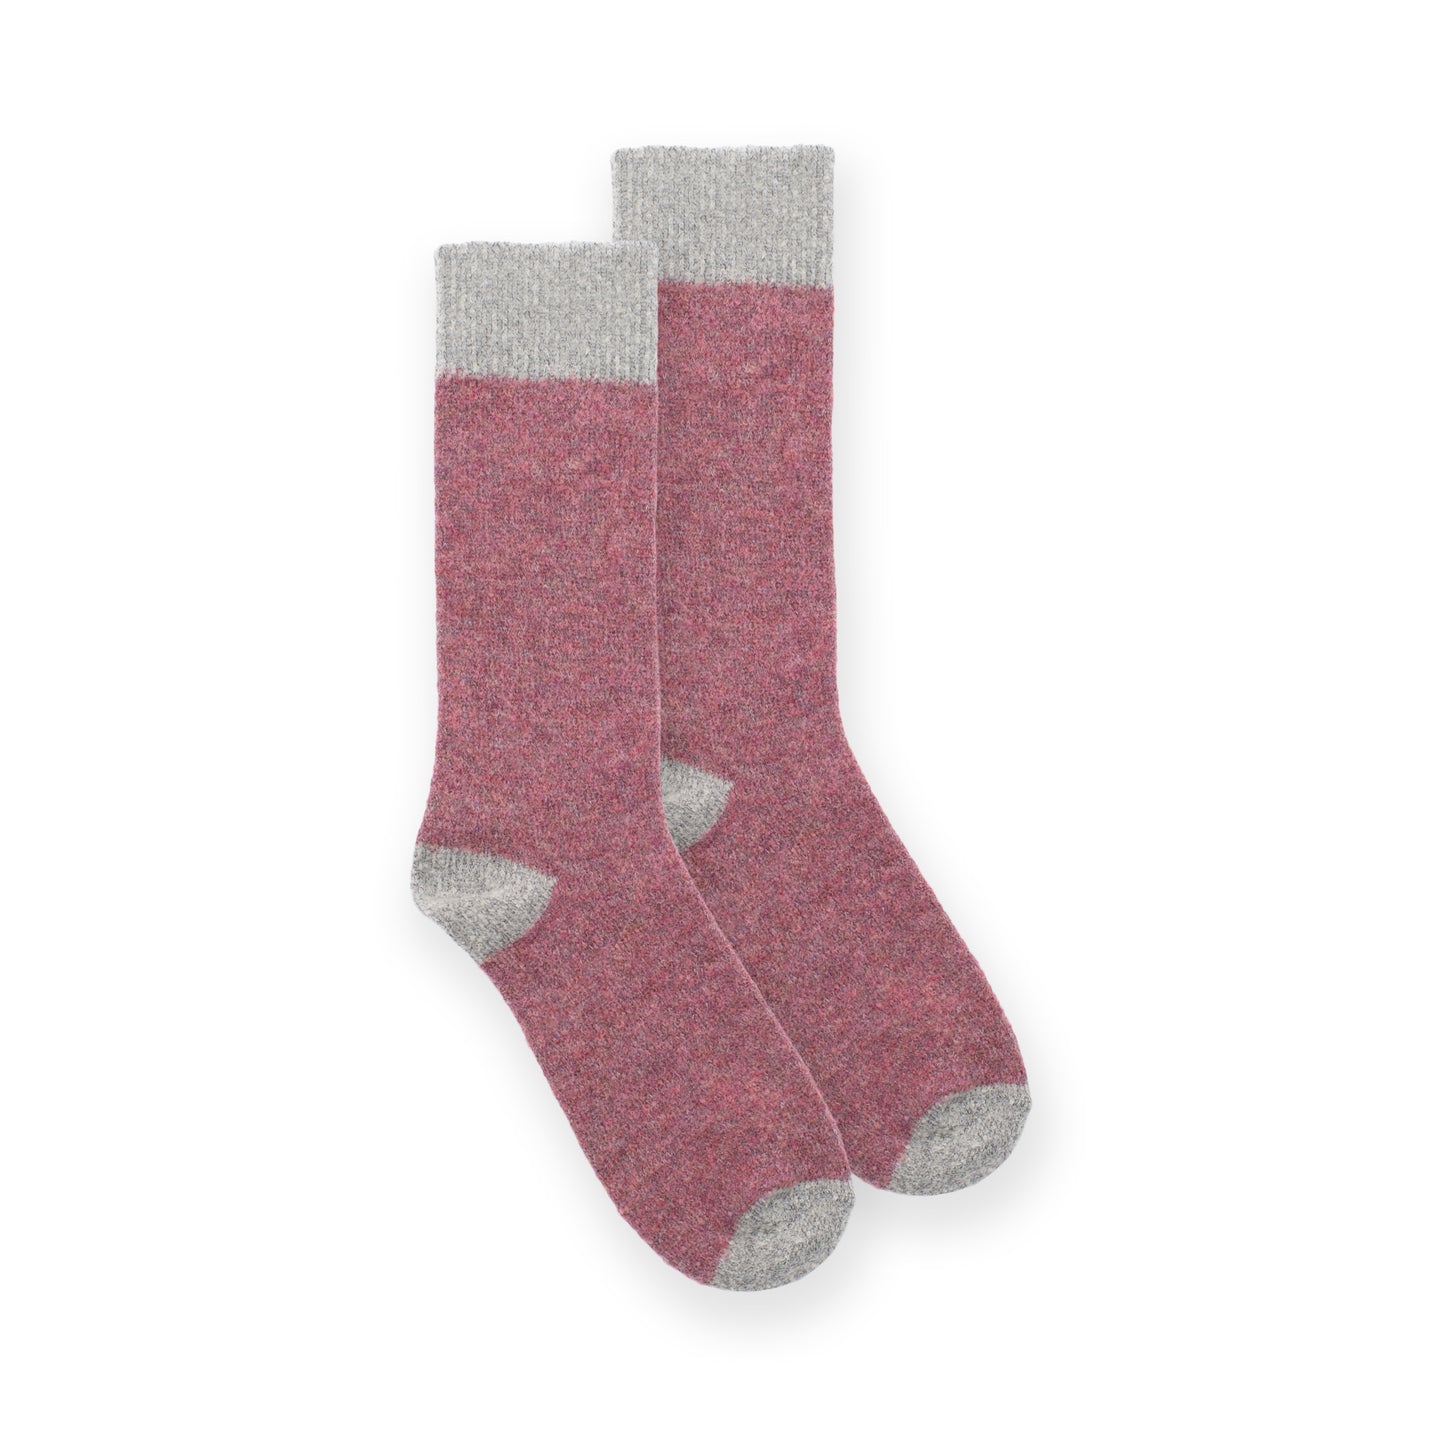 Socks pink - grey